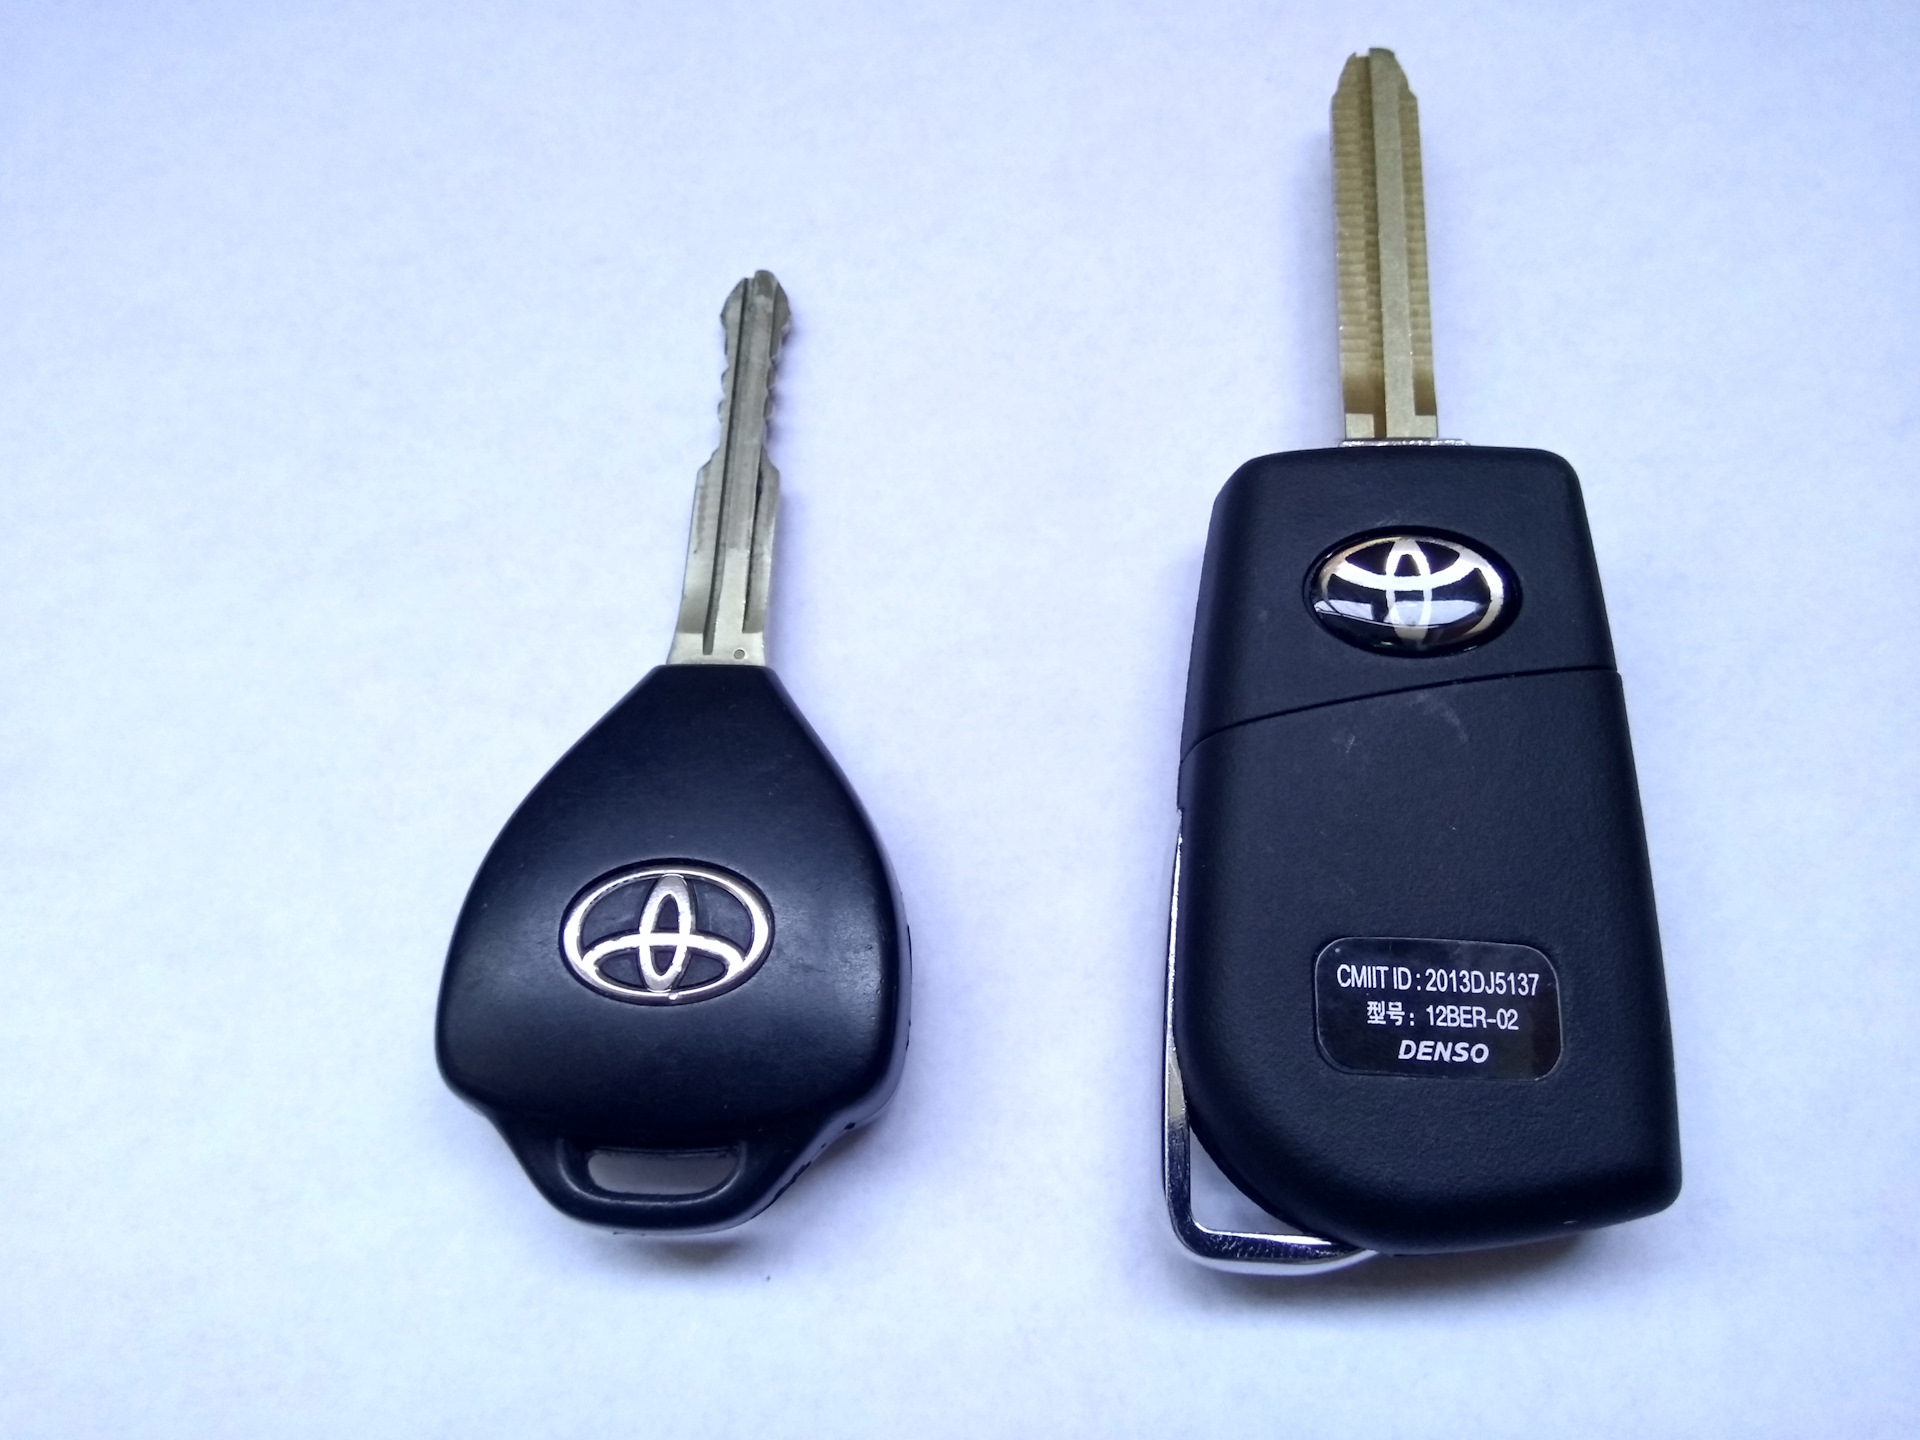 Ключ тойота рав. Тойота 40 выкидной ключ. Toyota Camry 40 ключ. Ключ Тойота Авенсис 2006. Выкидной ключ для Тойота Авенсис.